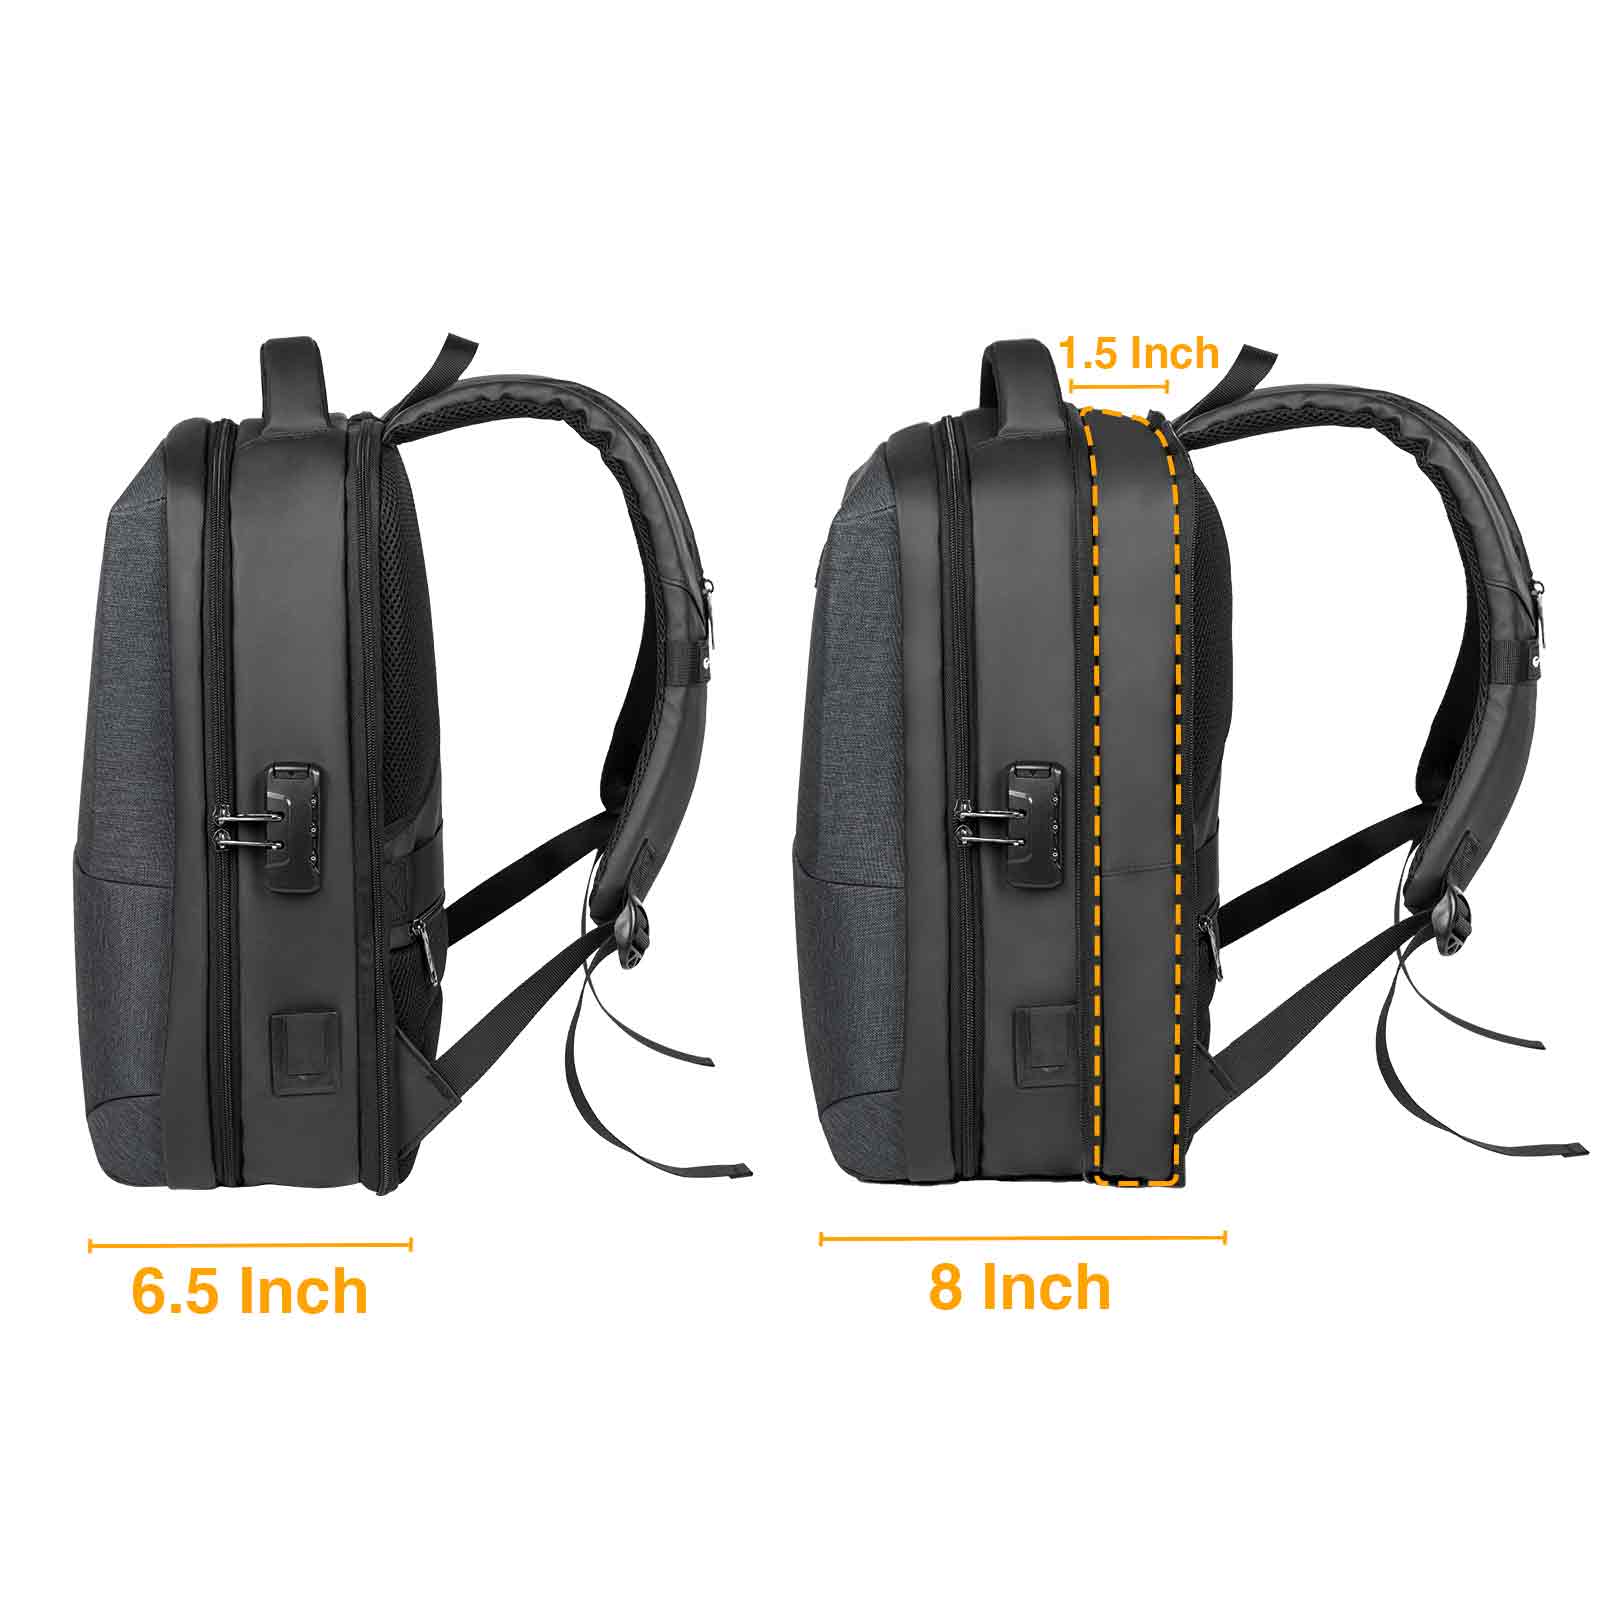 Matein Hard Shell Backpack - travel laptop backpack